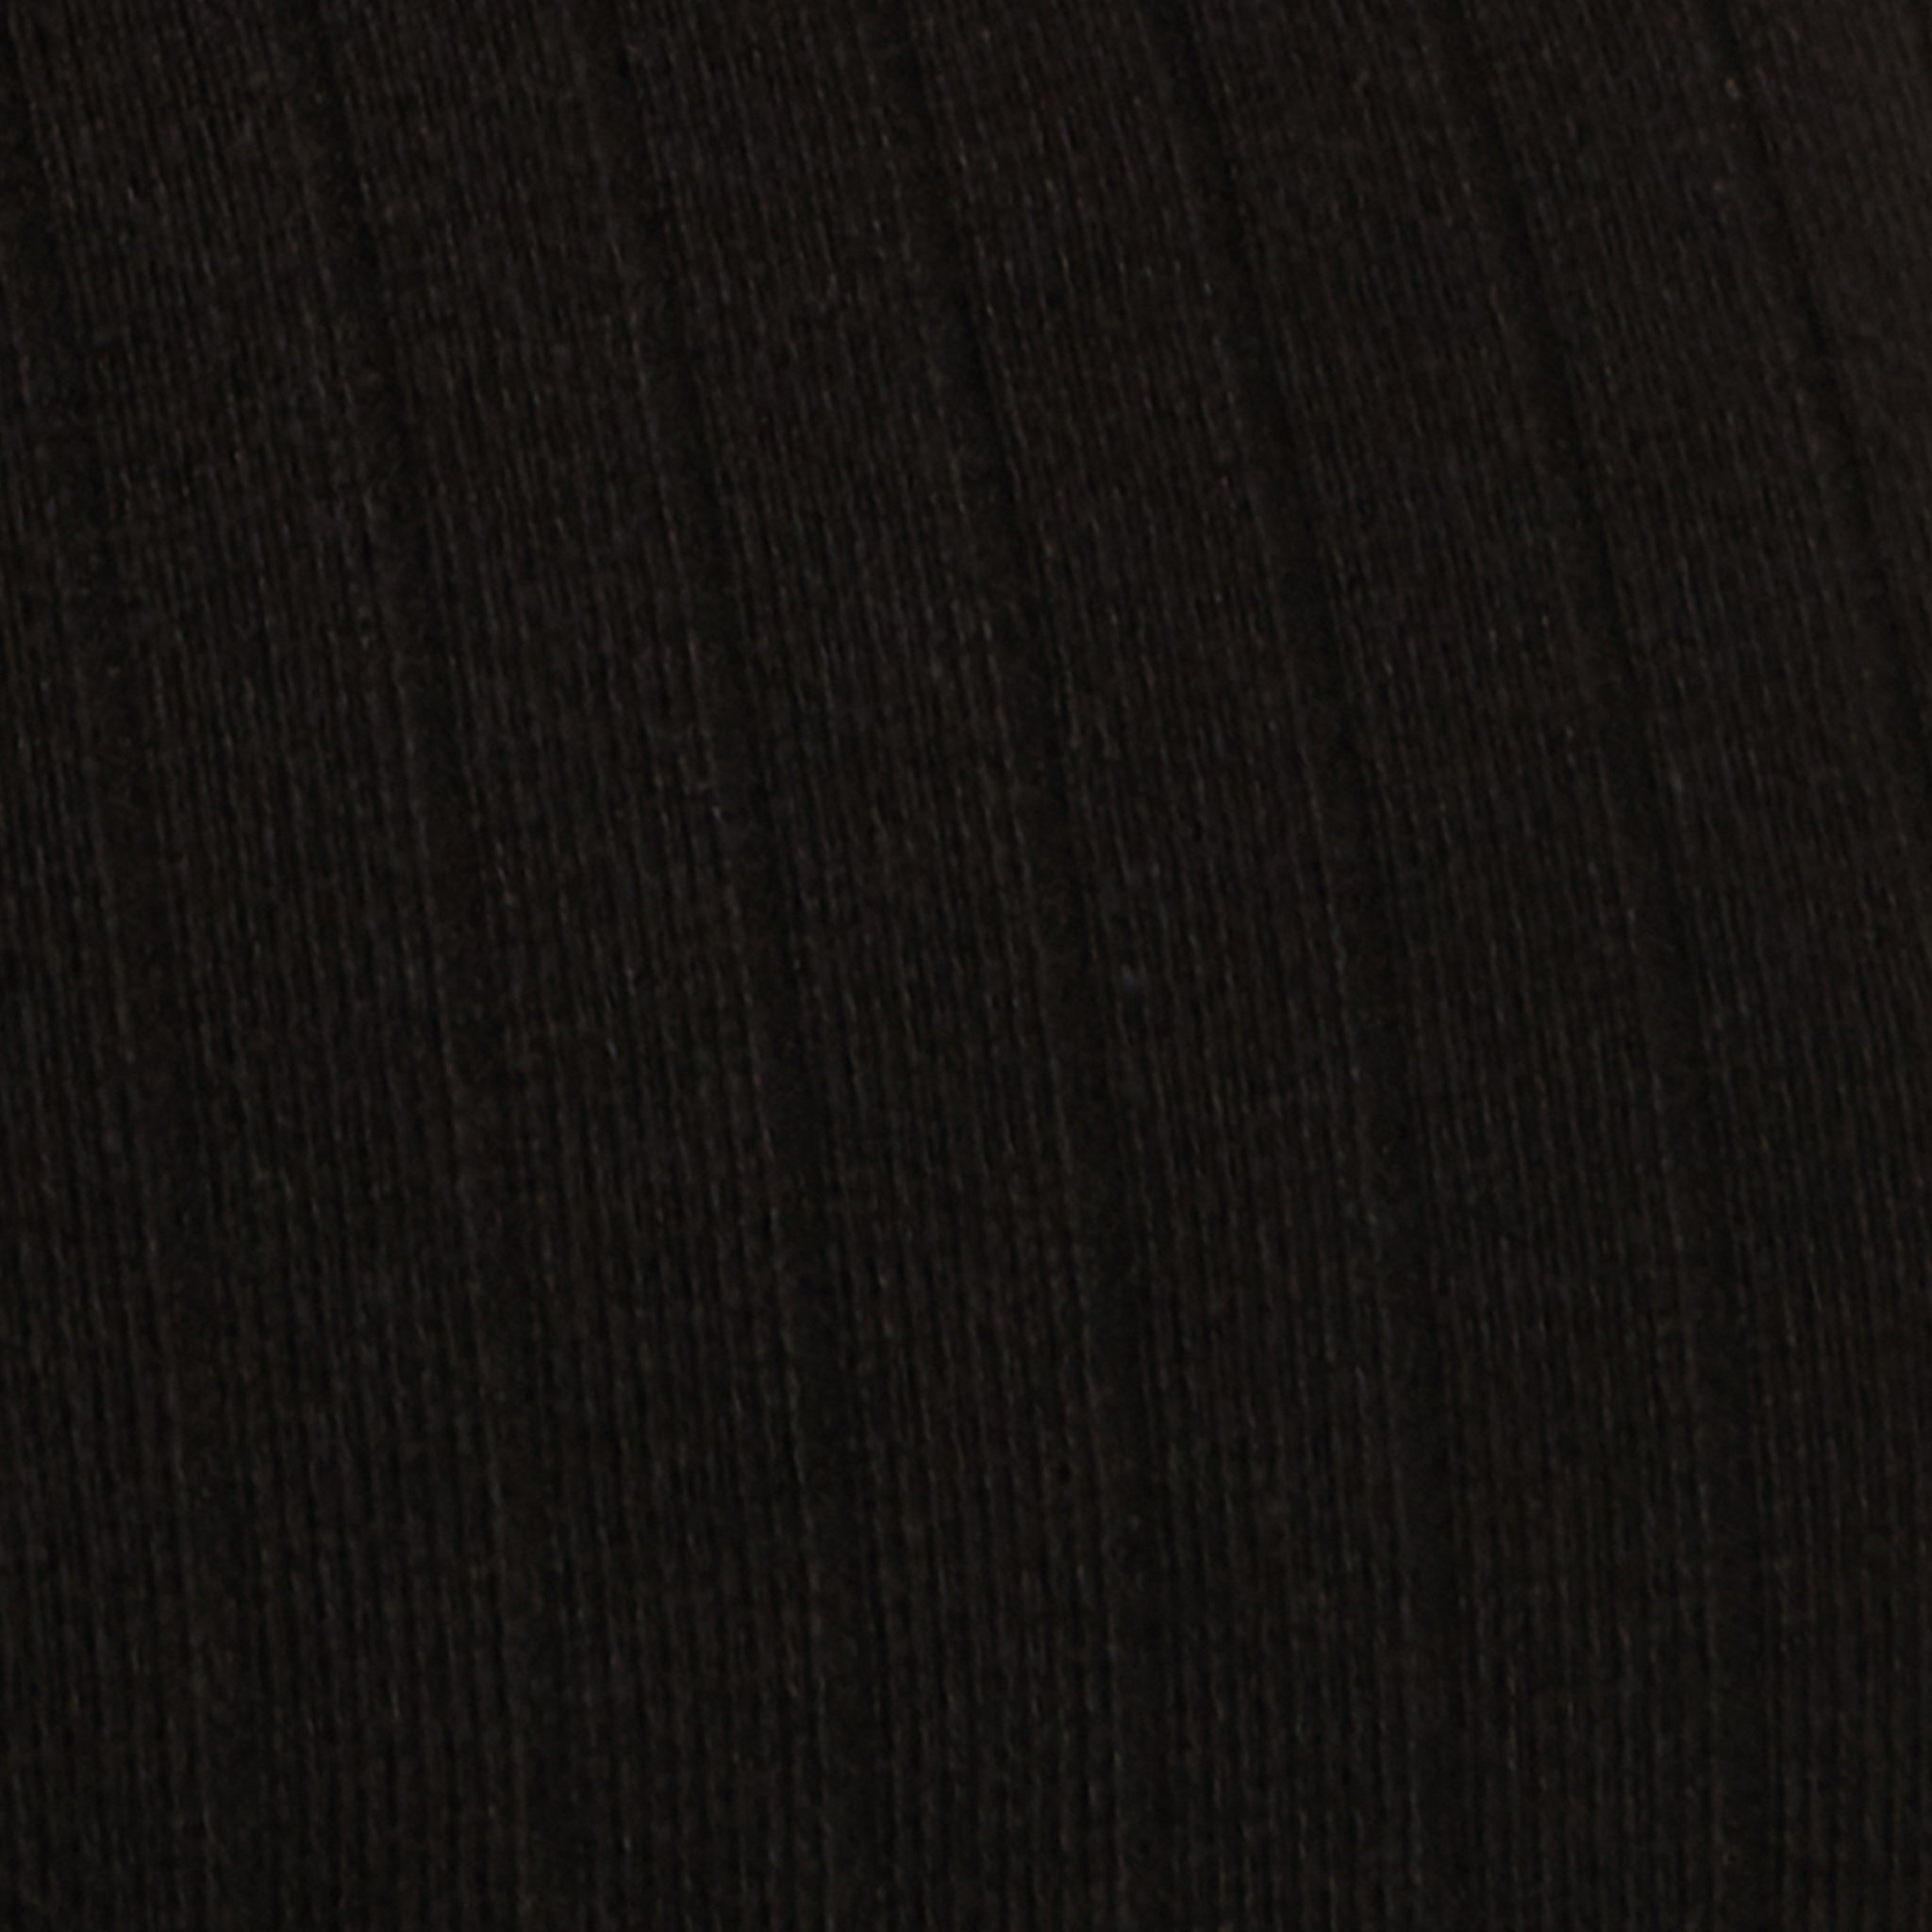 hello ronron | Angelique Dress Black | V-neck braided cable knit midi dress